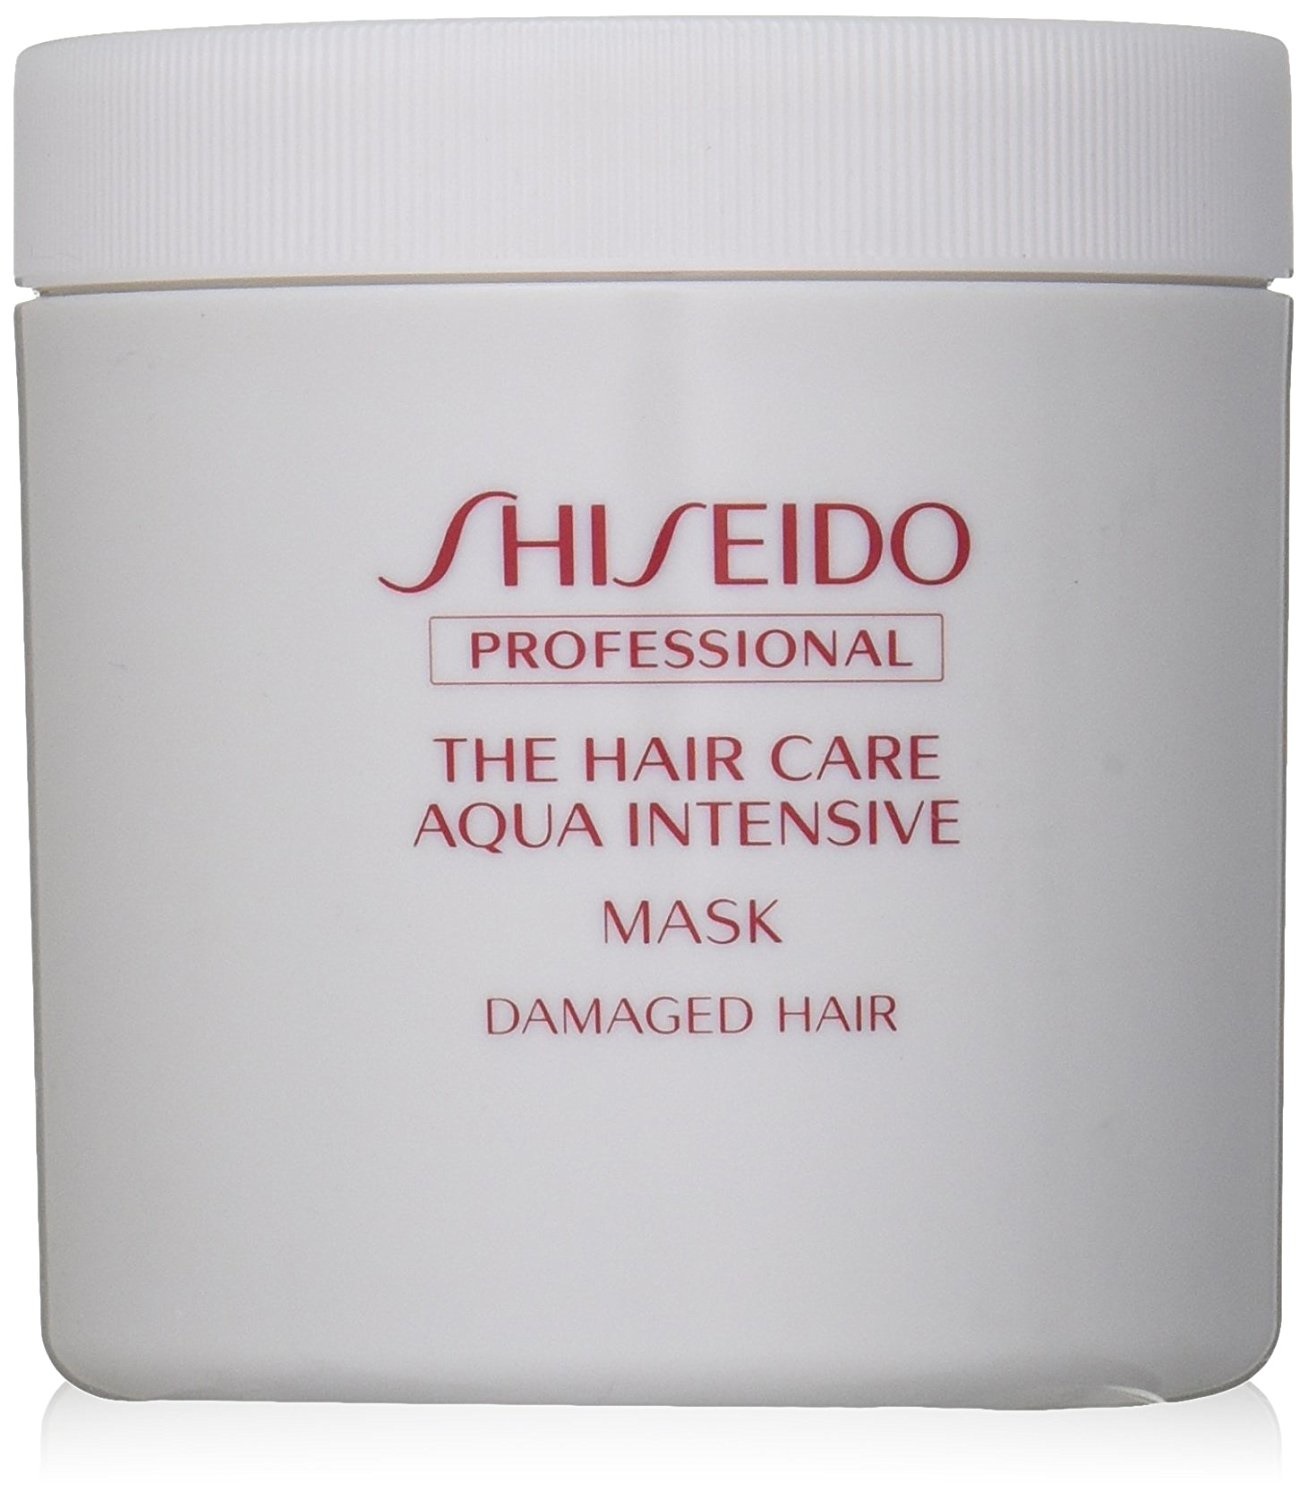 Shiseido Professional The Hair Care Aqua Intensive Mask Damaged Hair 680g